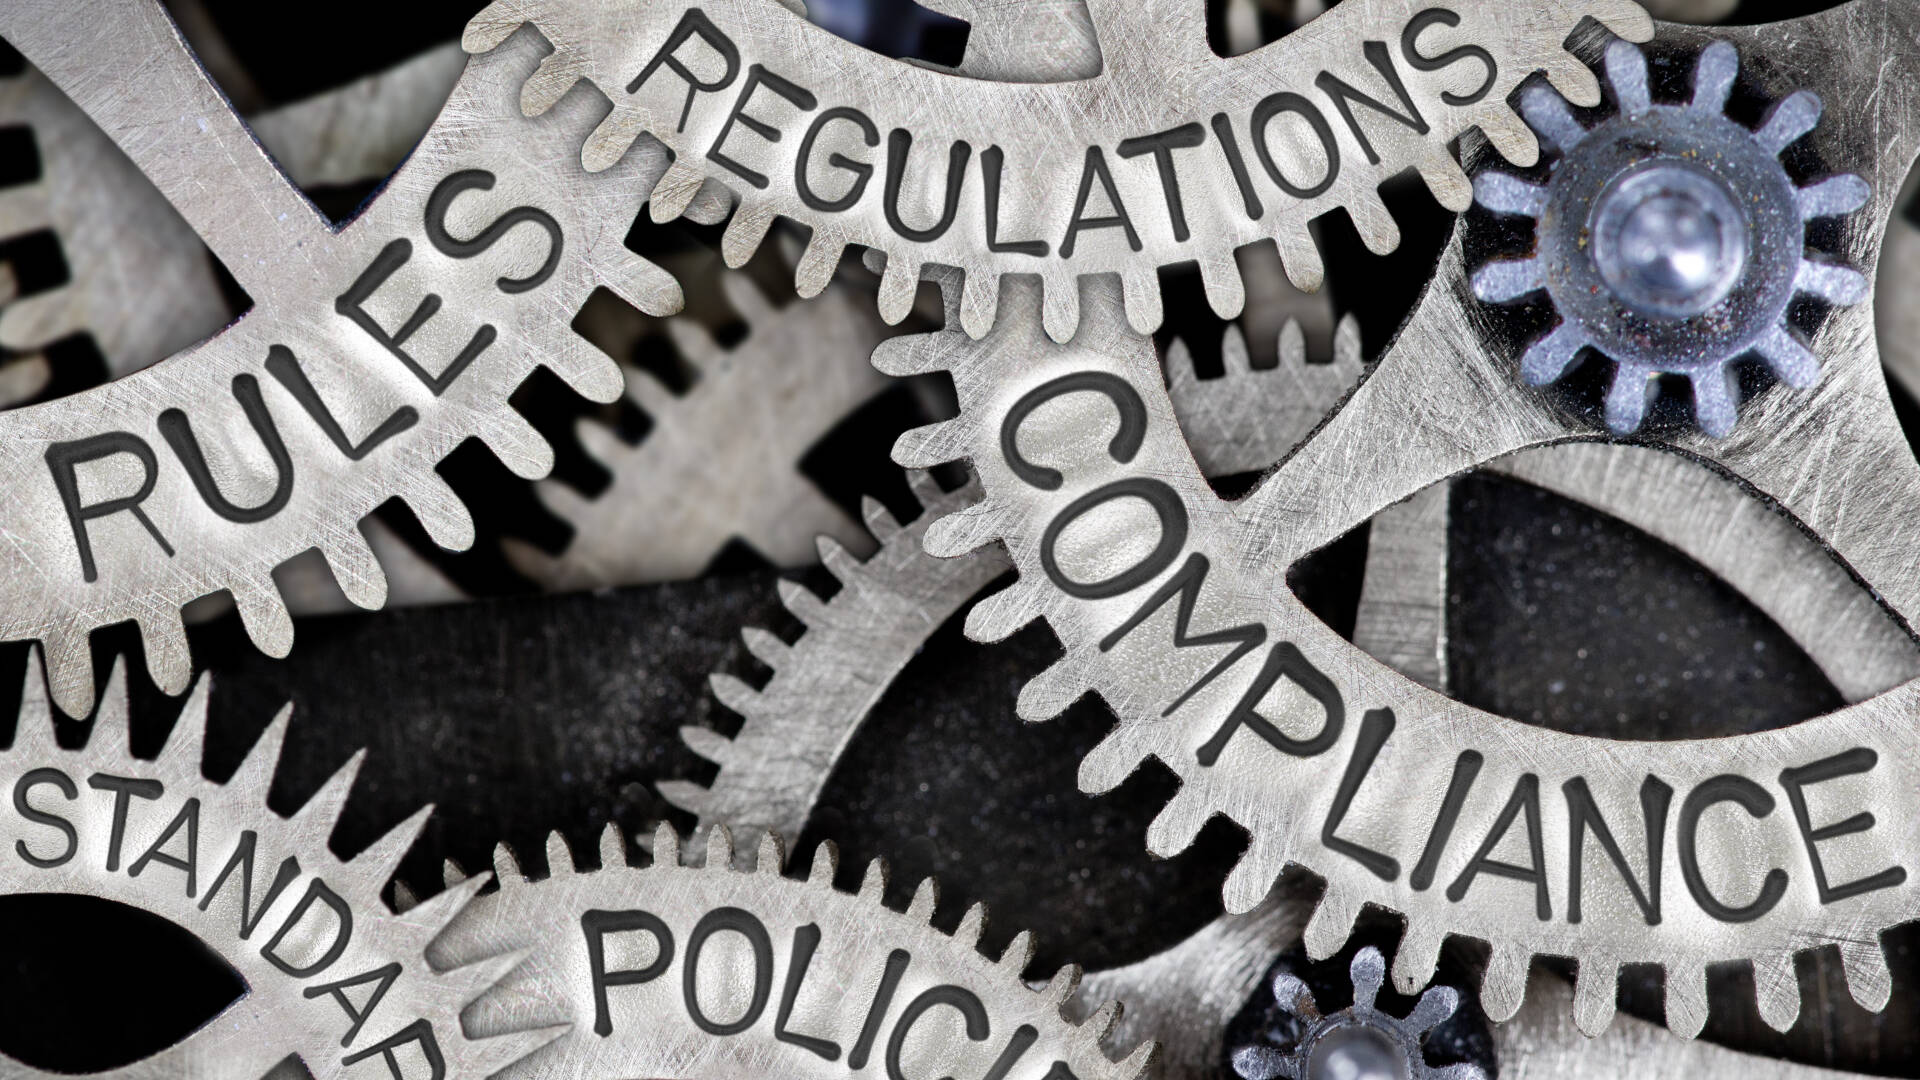 Lords call for regulators’ regulator to regulate regulation